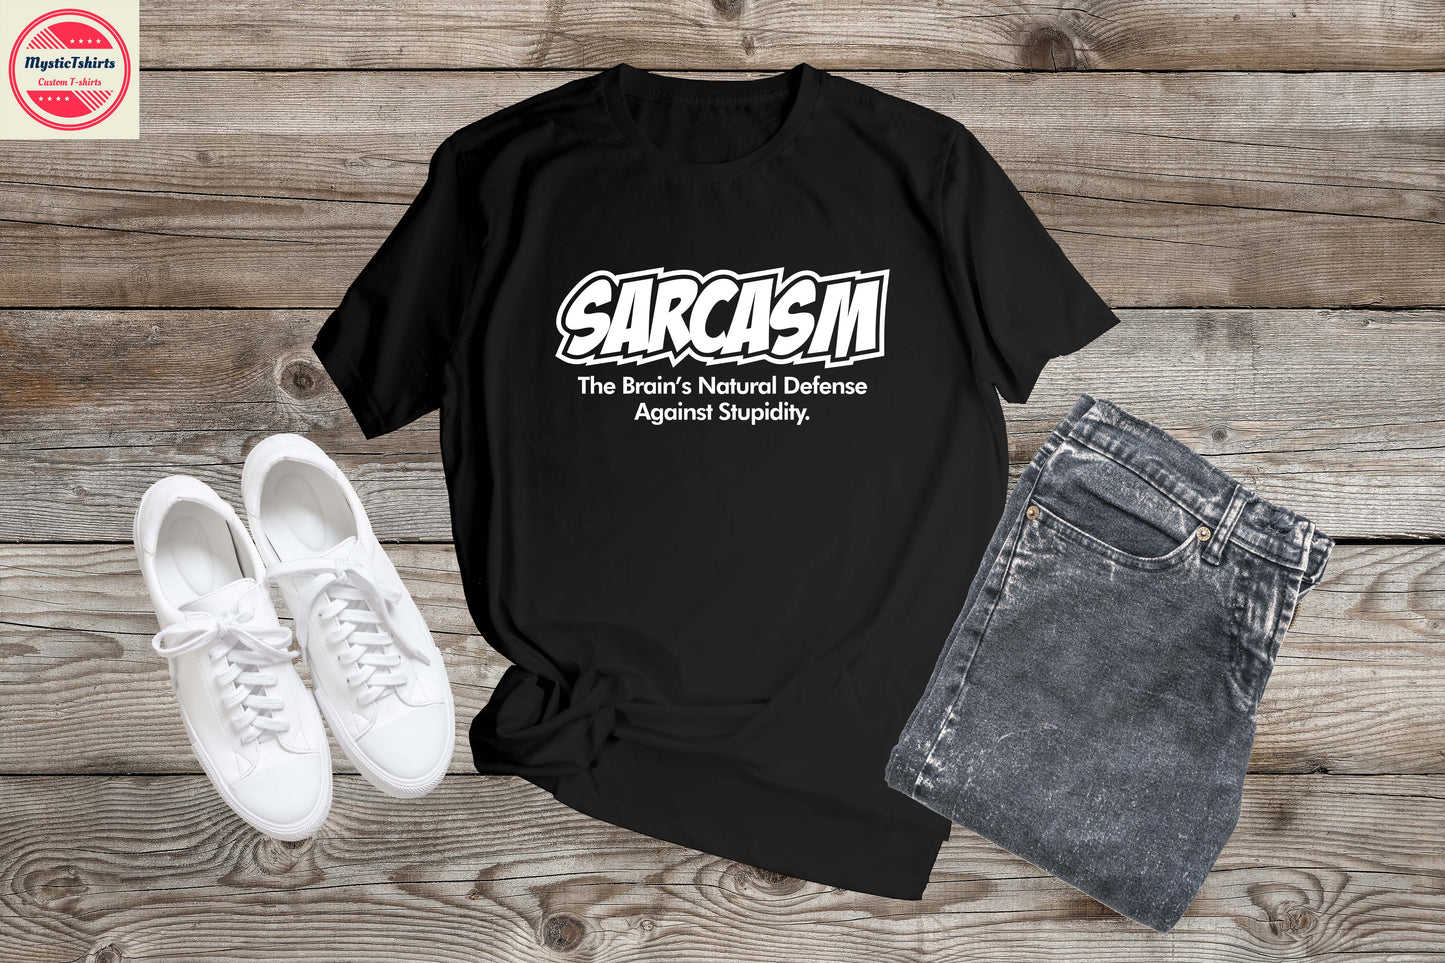 414. SARCASM, Custom Made Shirt, Personalized T-Shirt, Custom Text, Make Your Own Shirt, Custom Tee